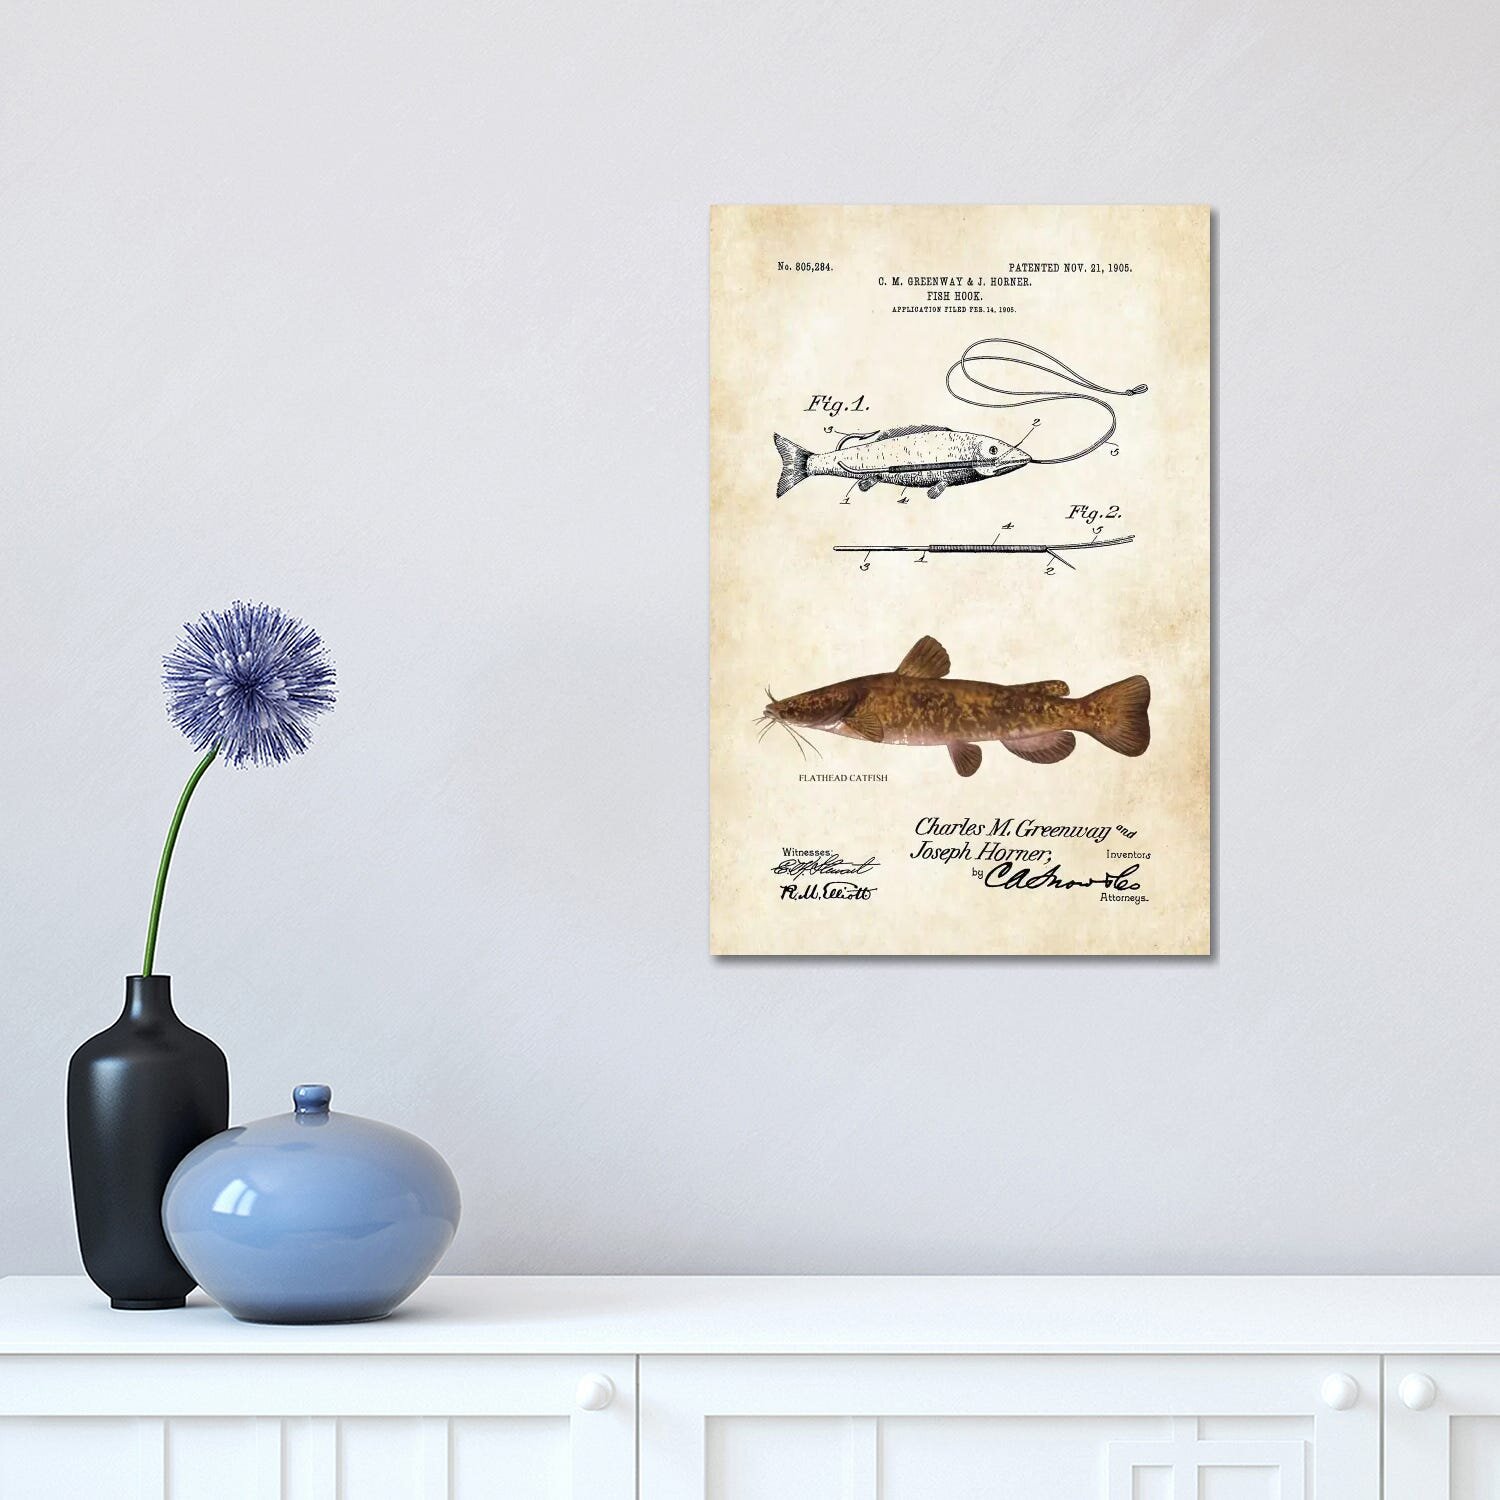 Bless international Flathead Catfish Fishing Lure On Canvas by Patent77  Print